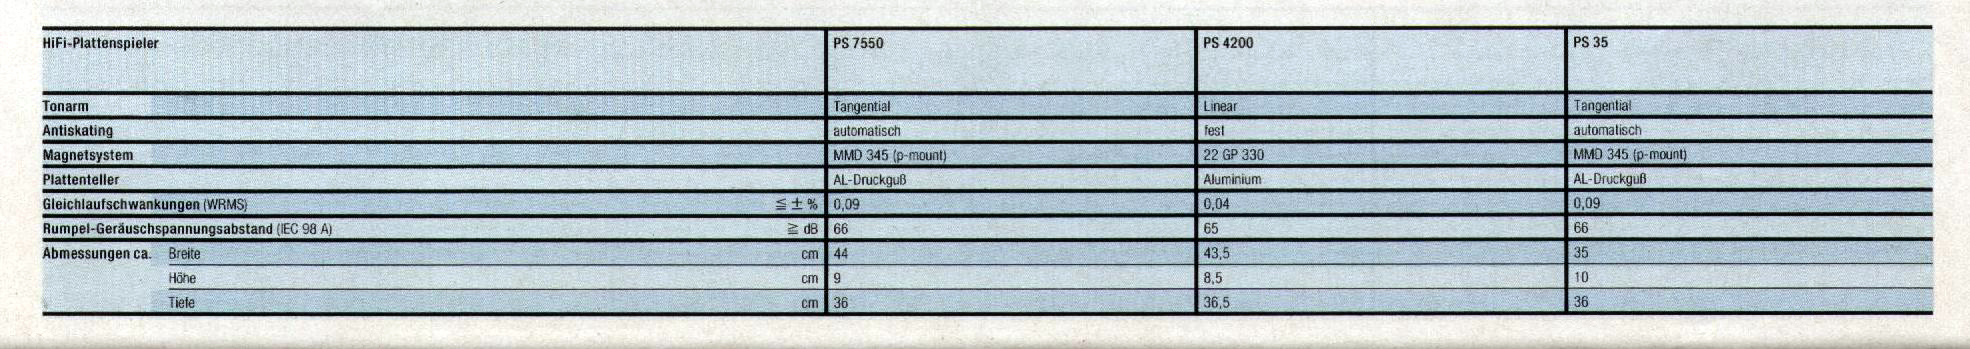 Grundig Plattenspieler-Daten-1987.jpg